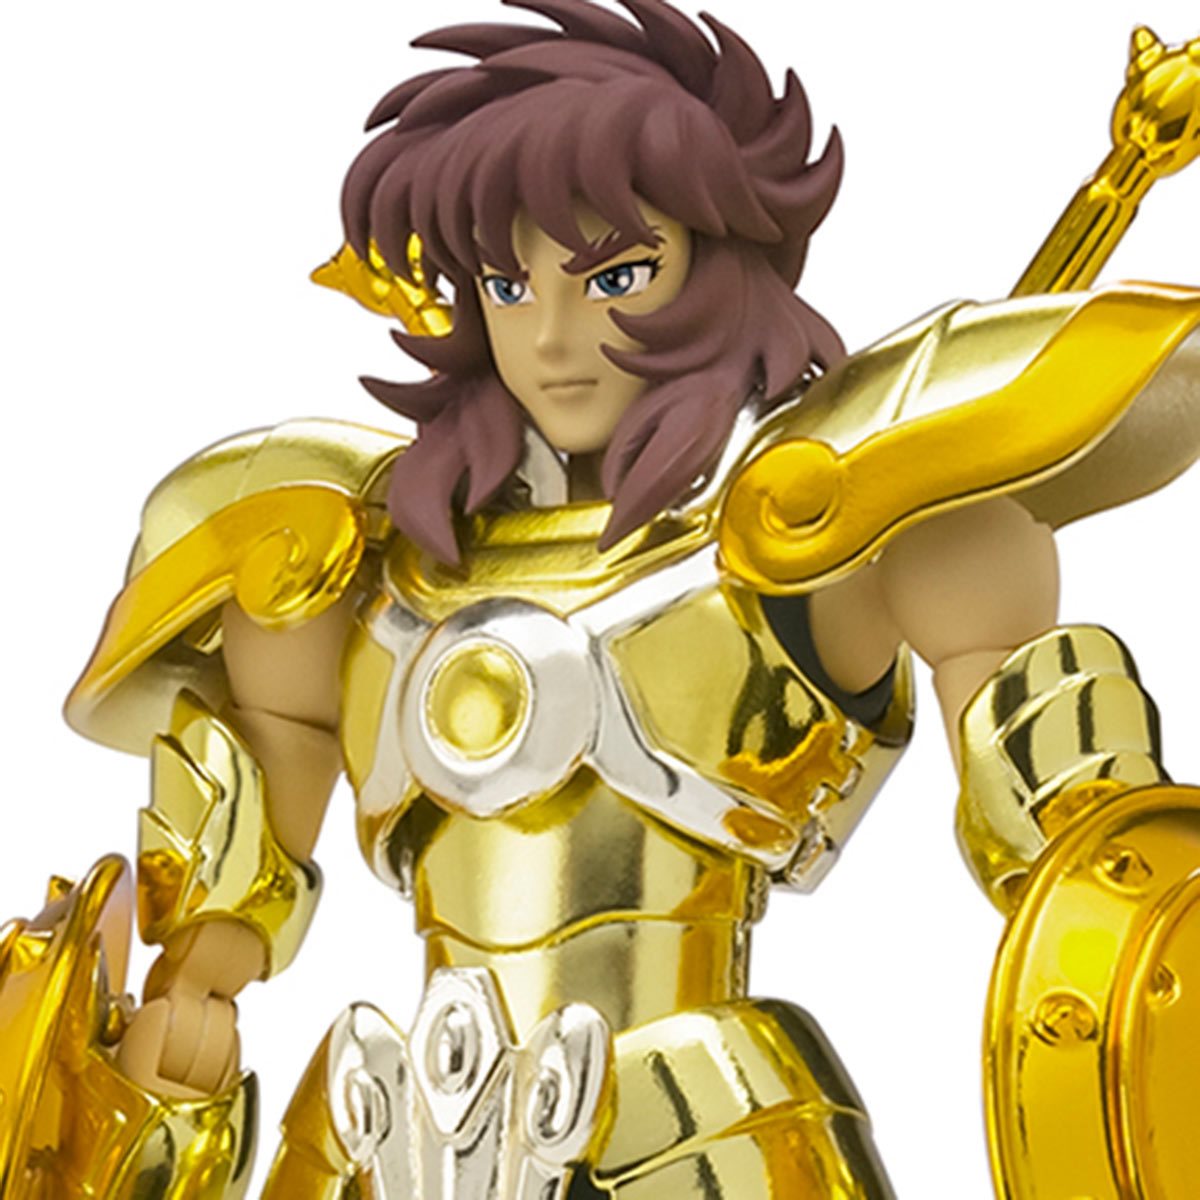  TAMASHII NATIONS Bandai Saint Cloth Myth EX Aries Mu (God  Cloth) Saint Seiya -Soul of Gold- Action Figure : Toys & Games